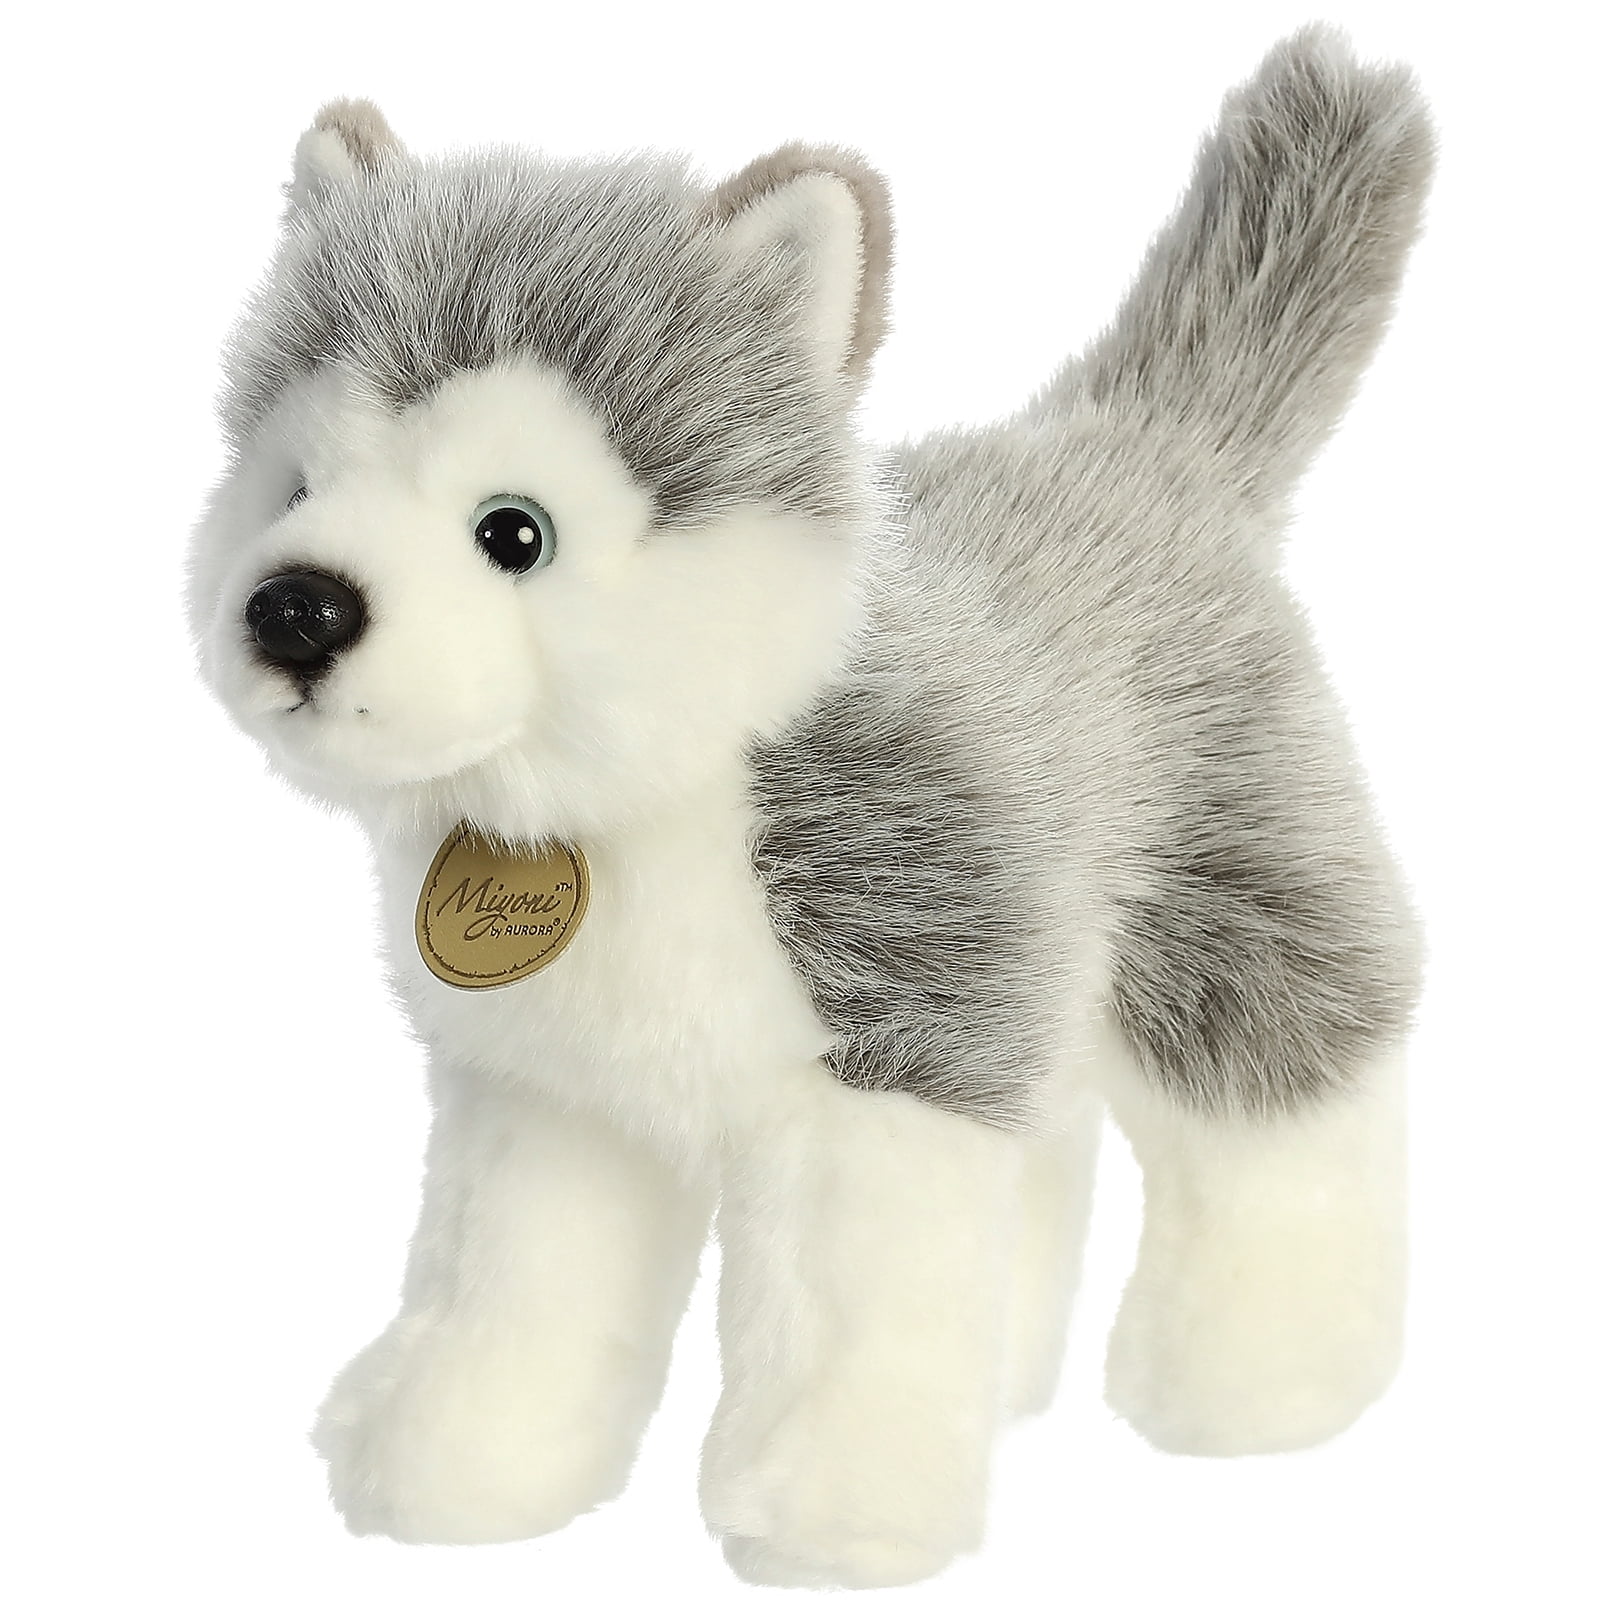 TheMogan 8 Cute Husky Puppy Dog Soft Plush Stuffed Animal Toy Grey 